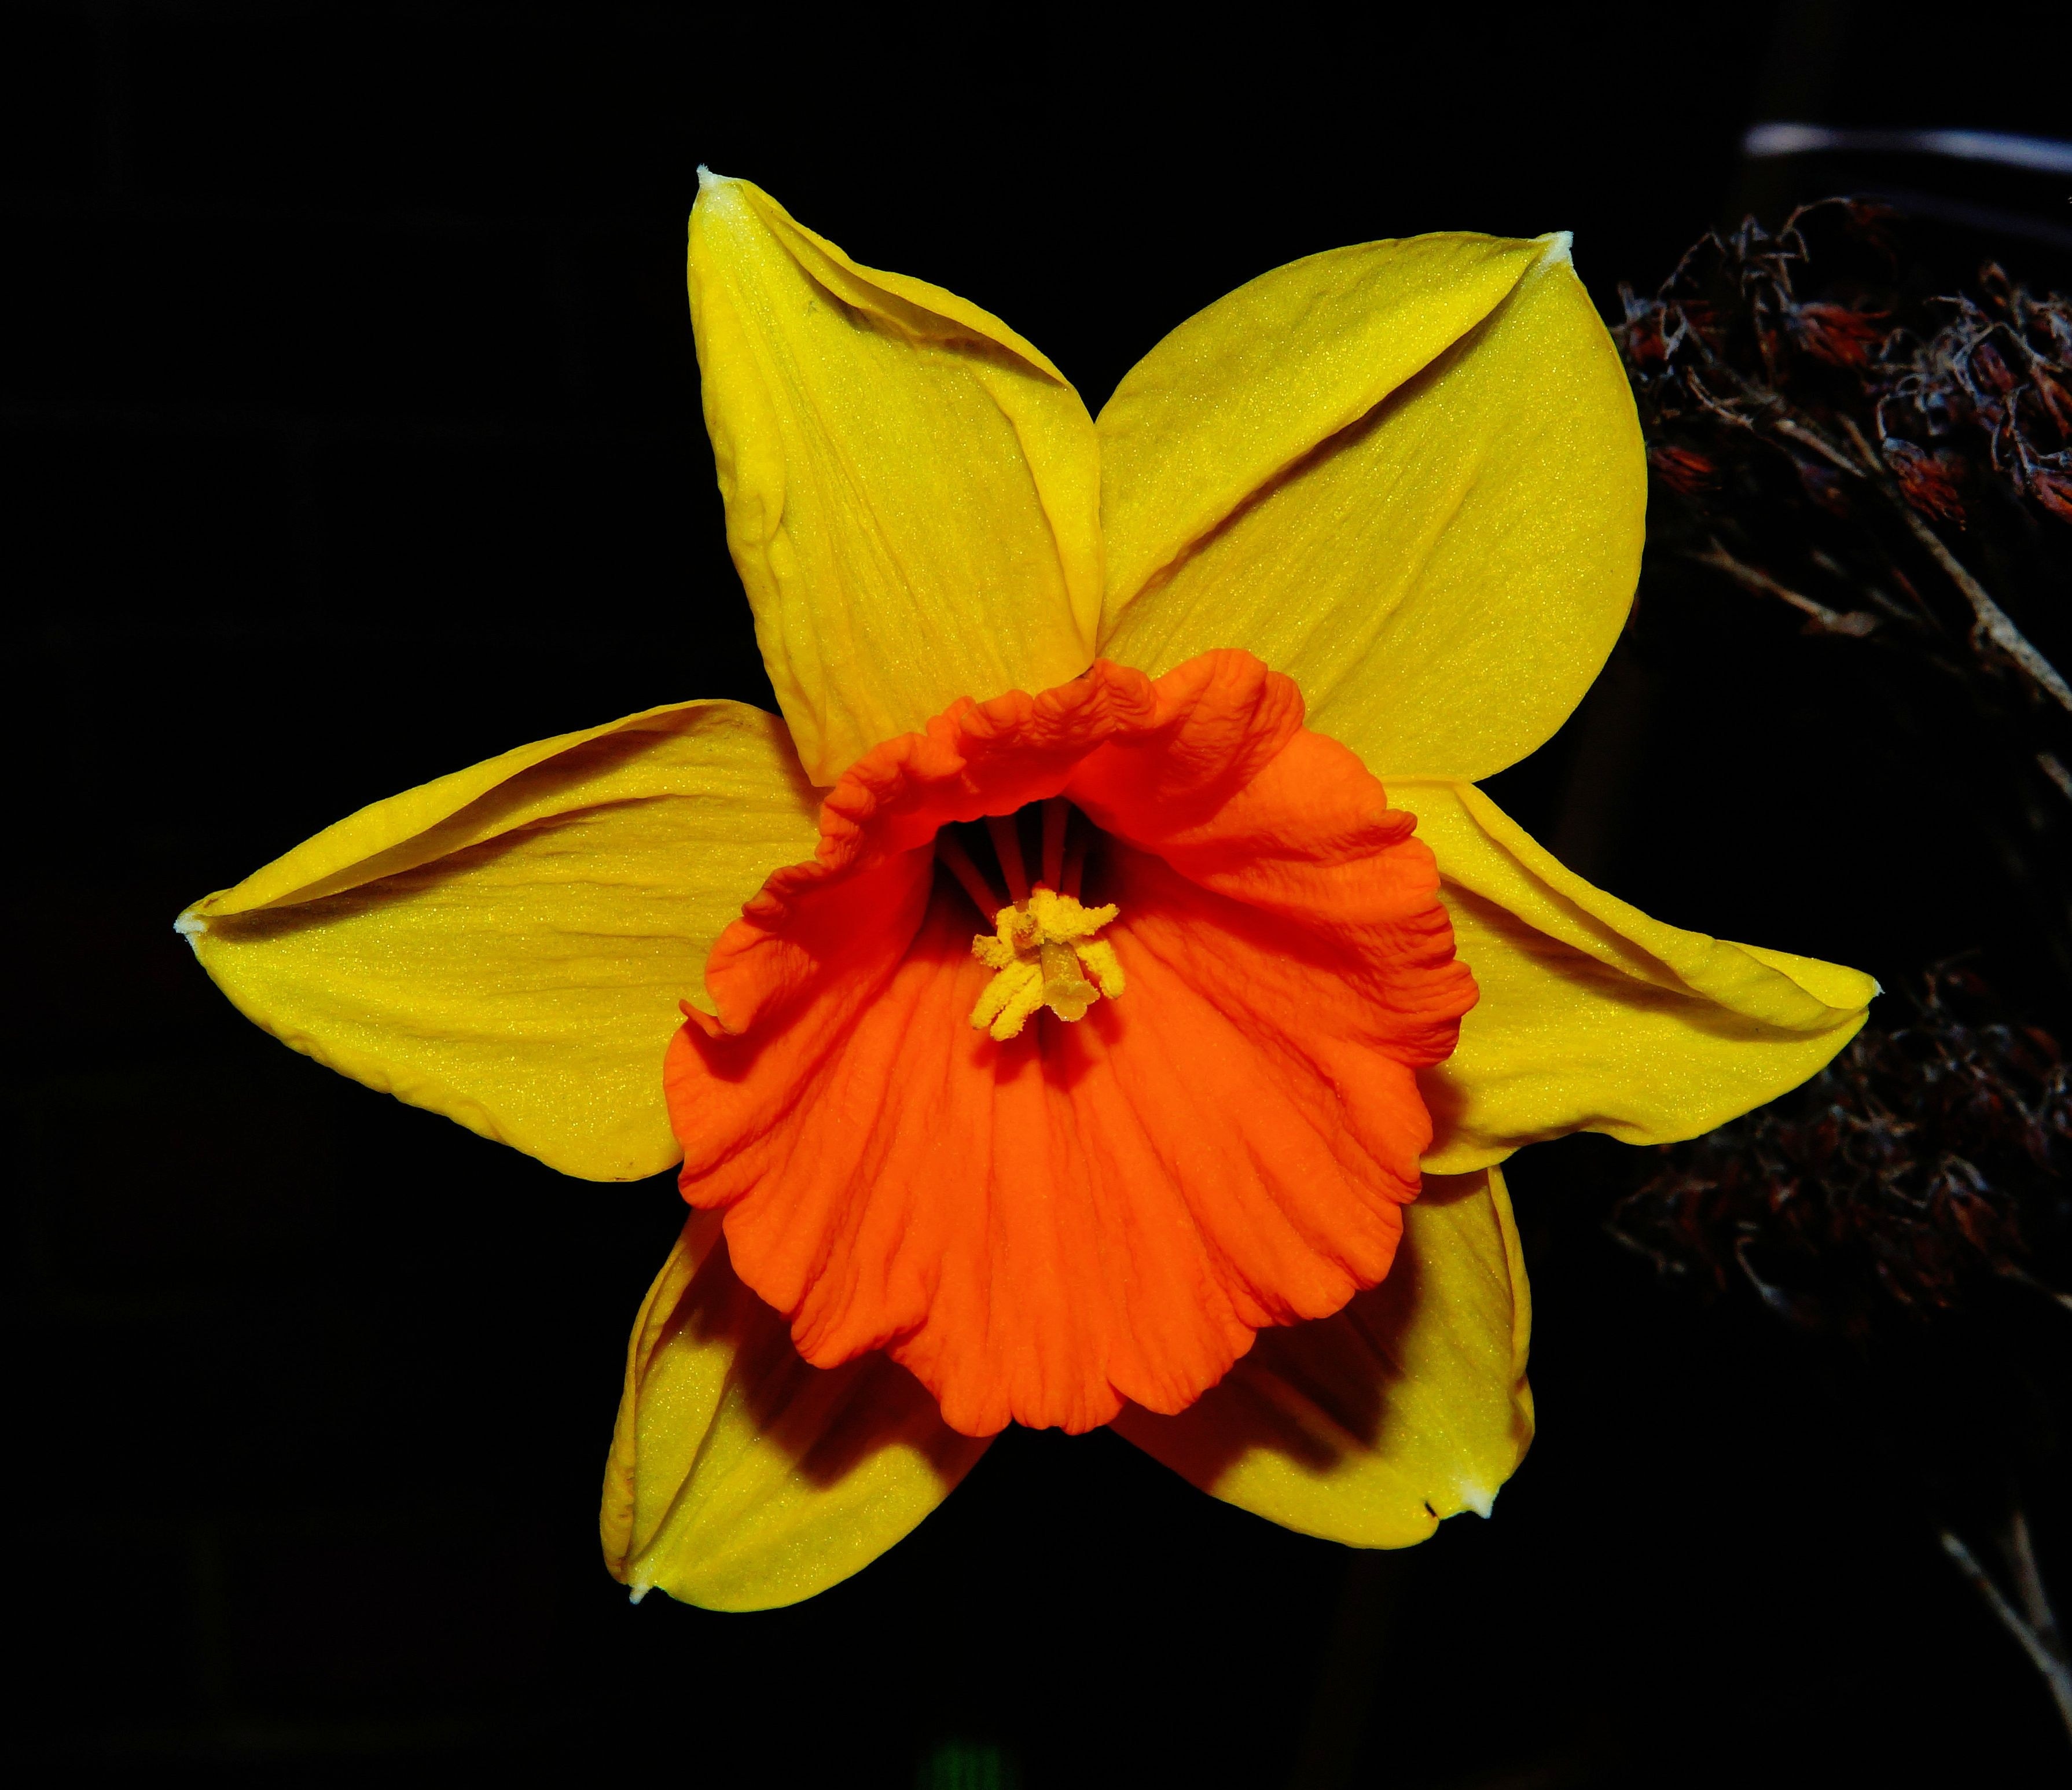 yellow and orange petaled flower